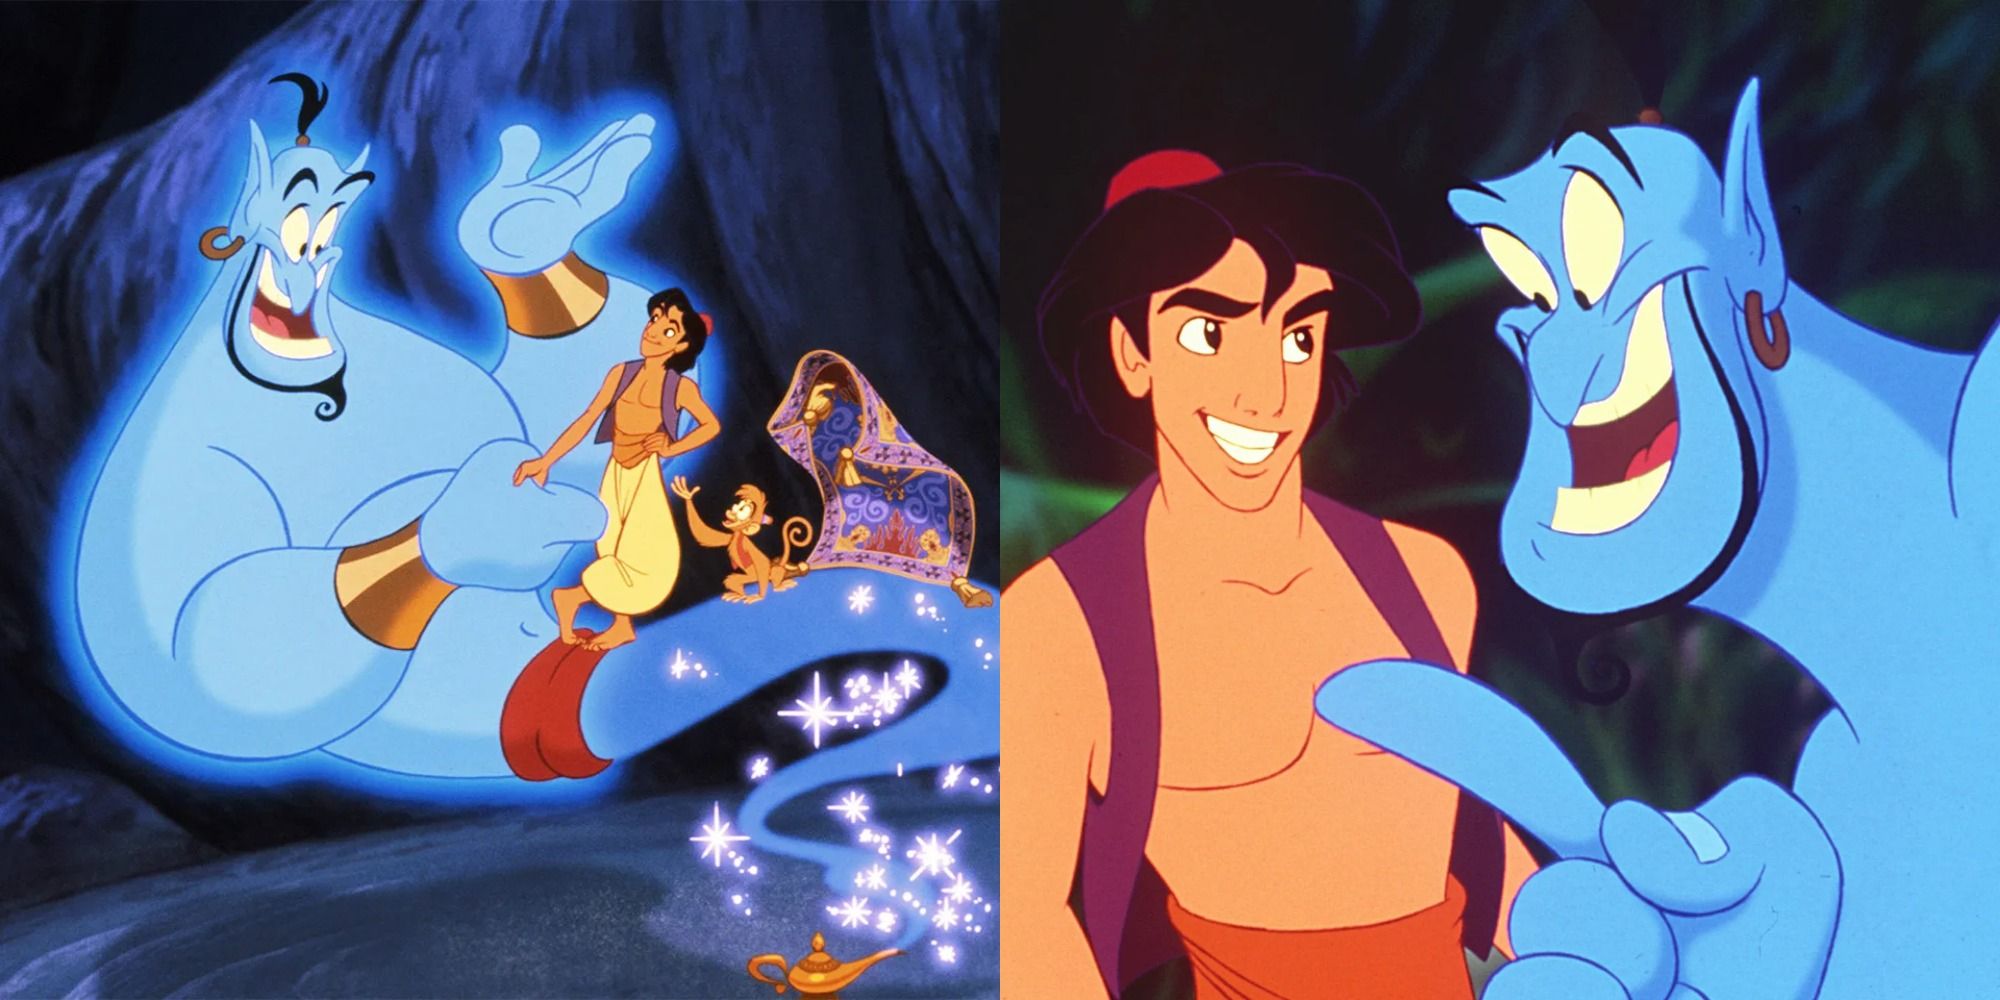 Split image of Genie, Aladdin, Abu, and the carpet talking, and Genie and Aladdin smiling in Aladdin.